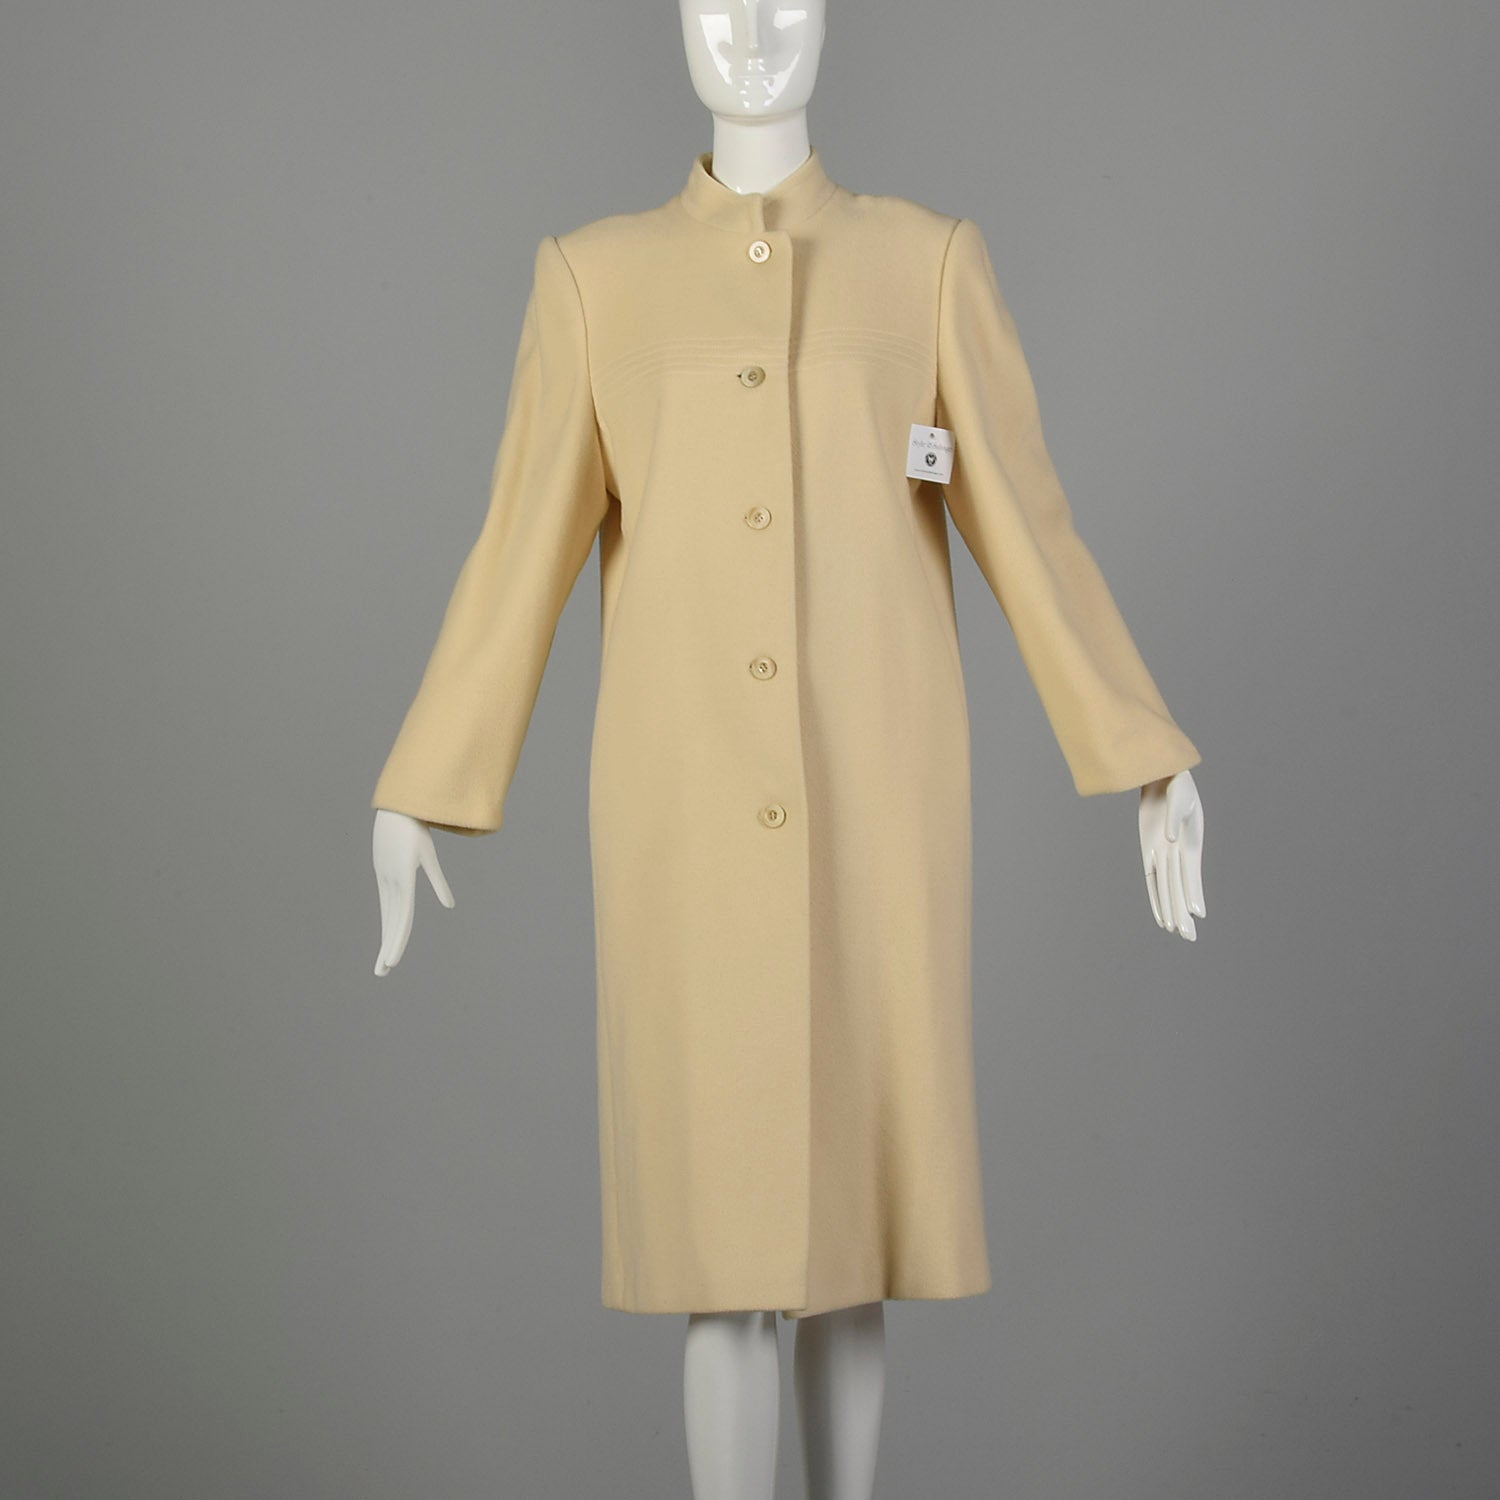 Medium 1970s Minimalist Cashmere Coat Cream Autumn Outerwear with Mandarin Collar